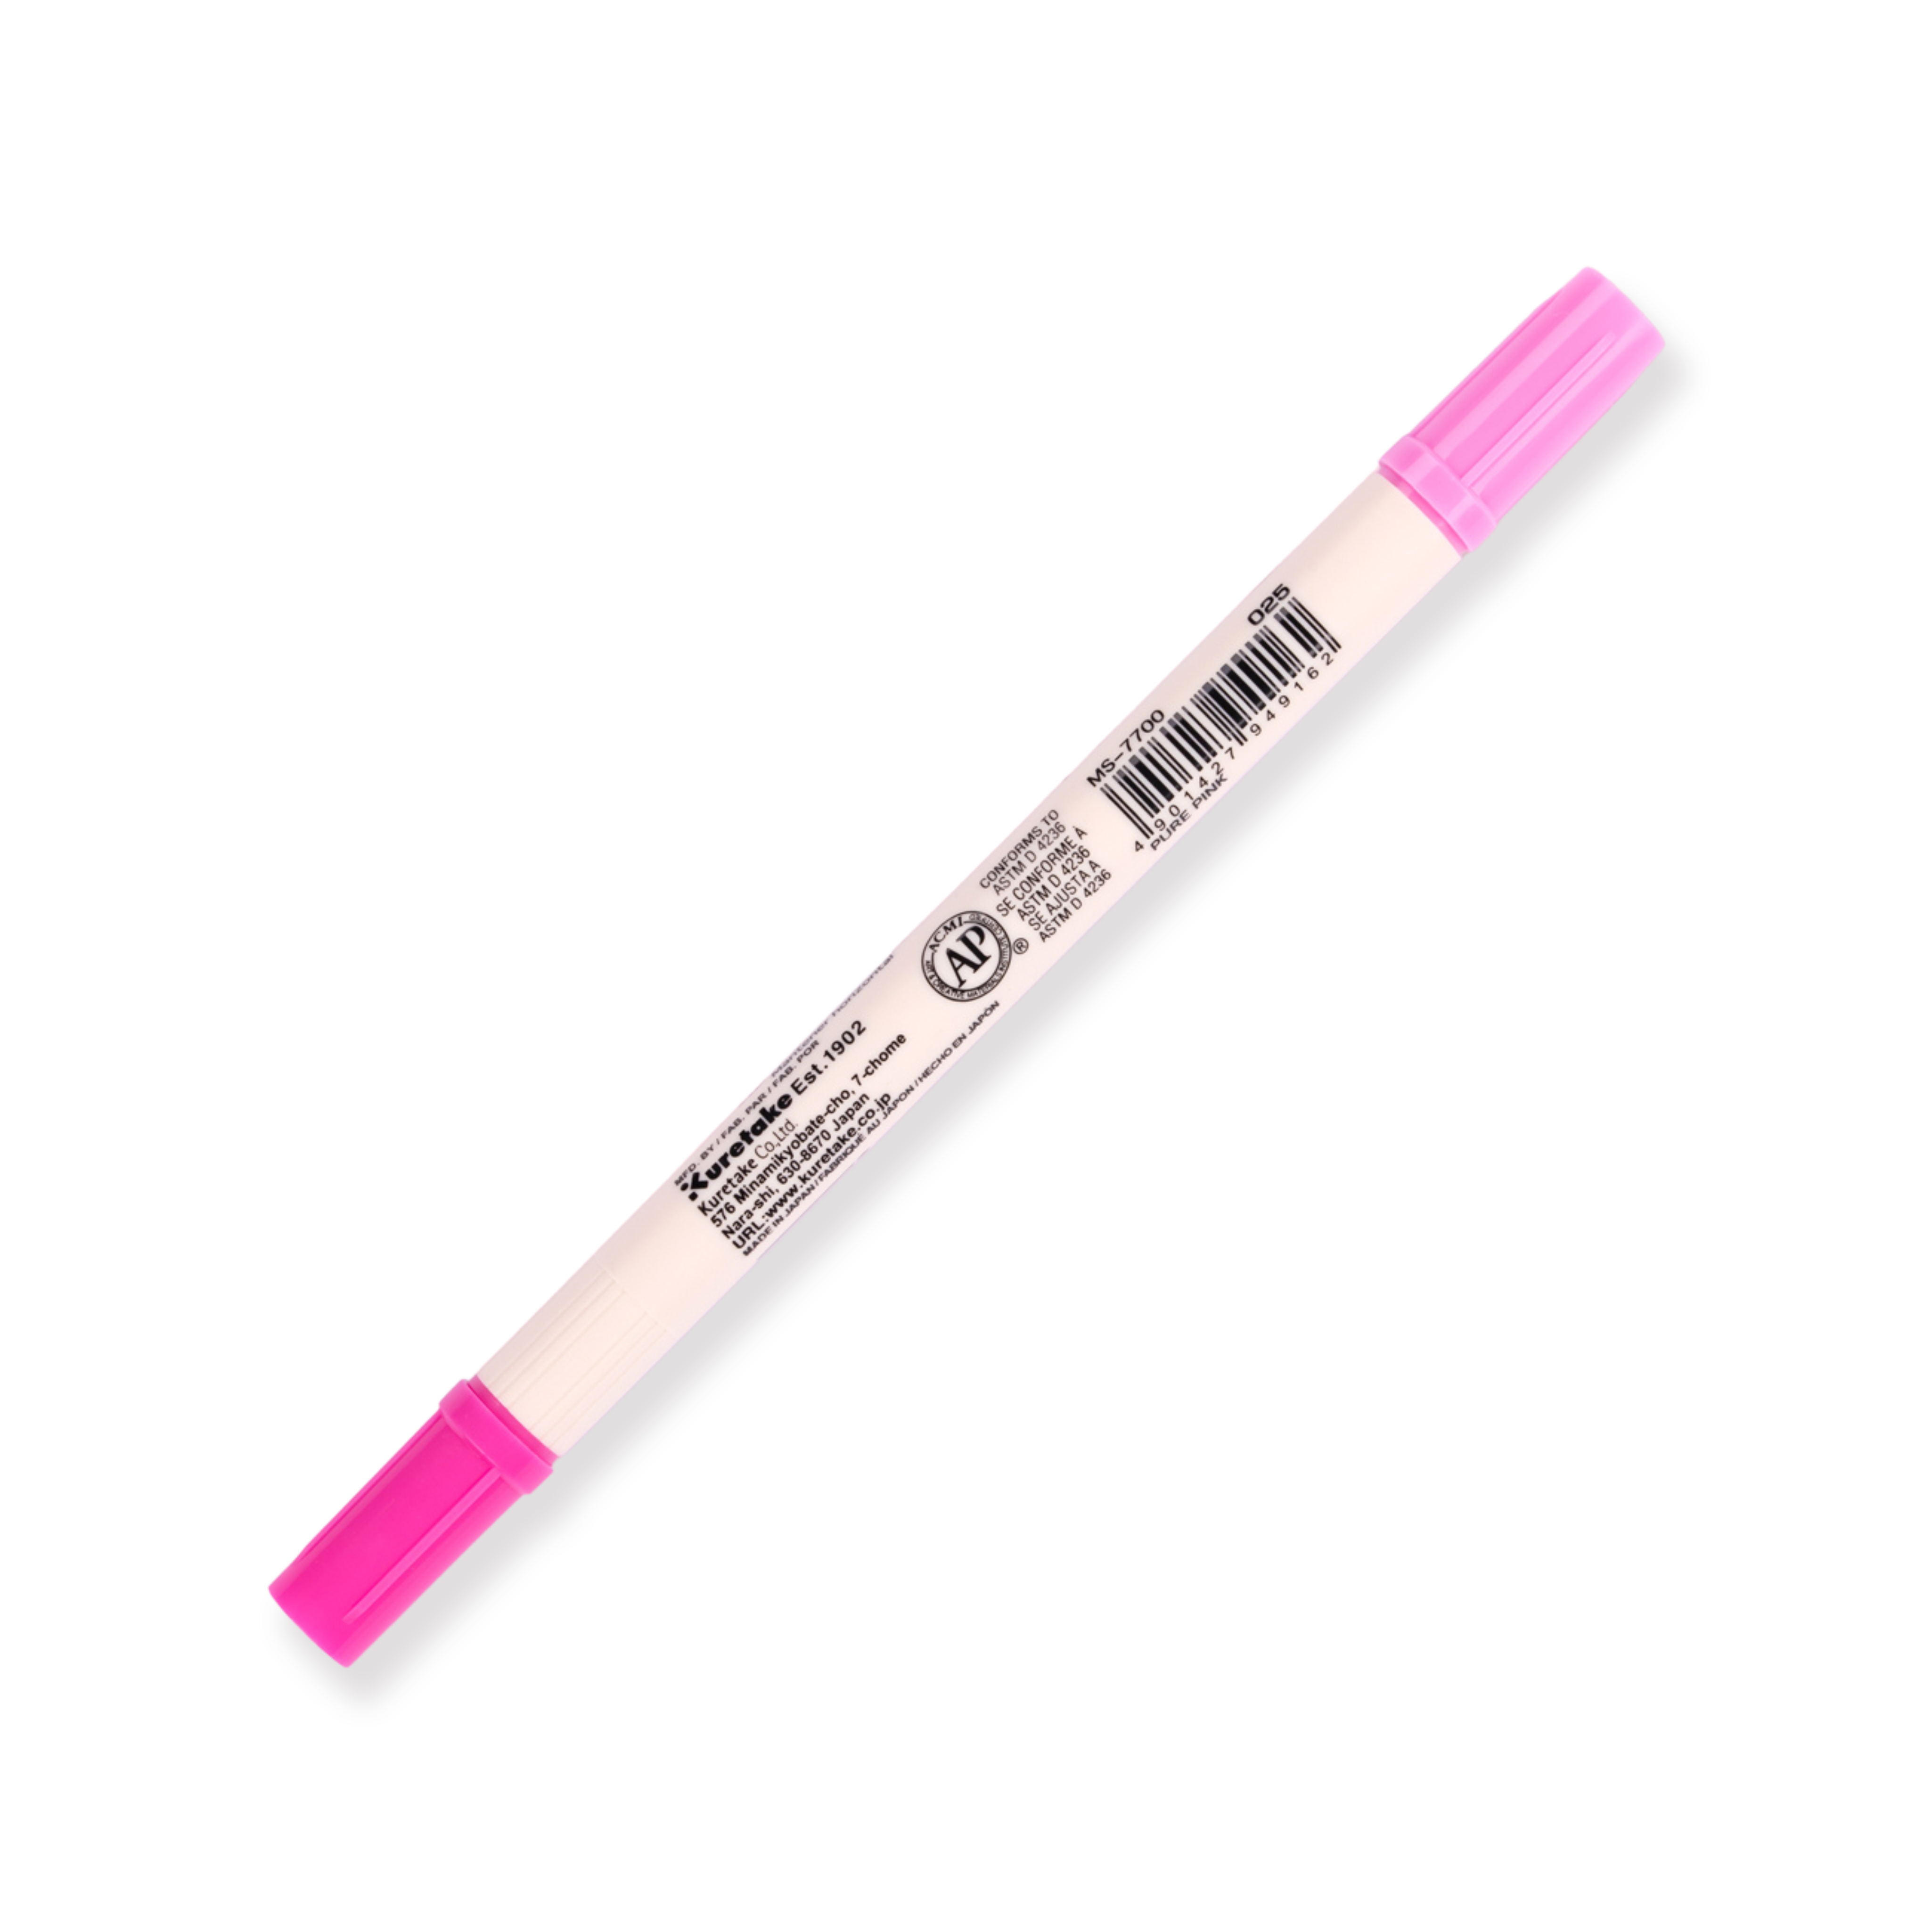 Kuretake Zig Brushables Brush Pen - Rosa puro 025